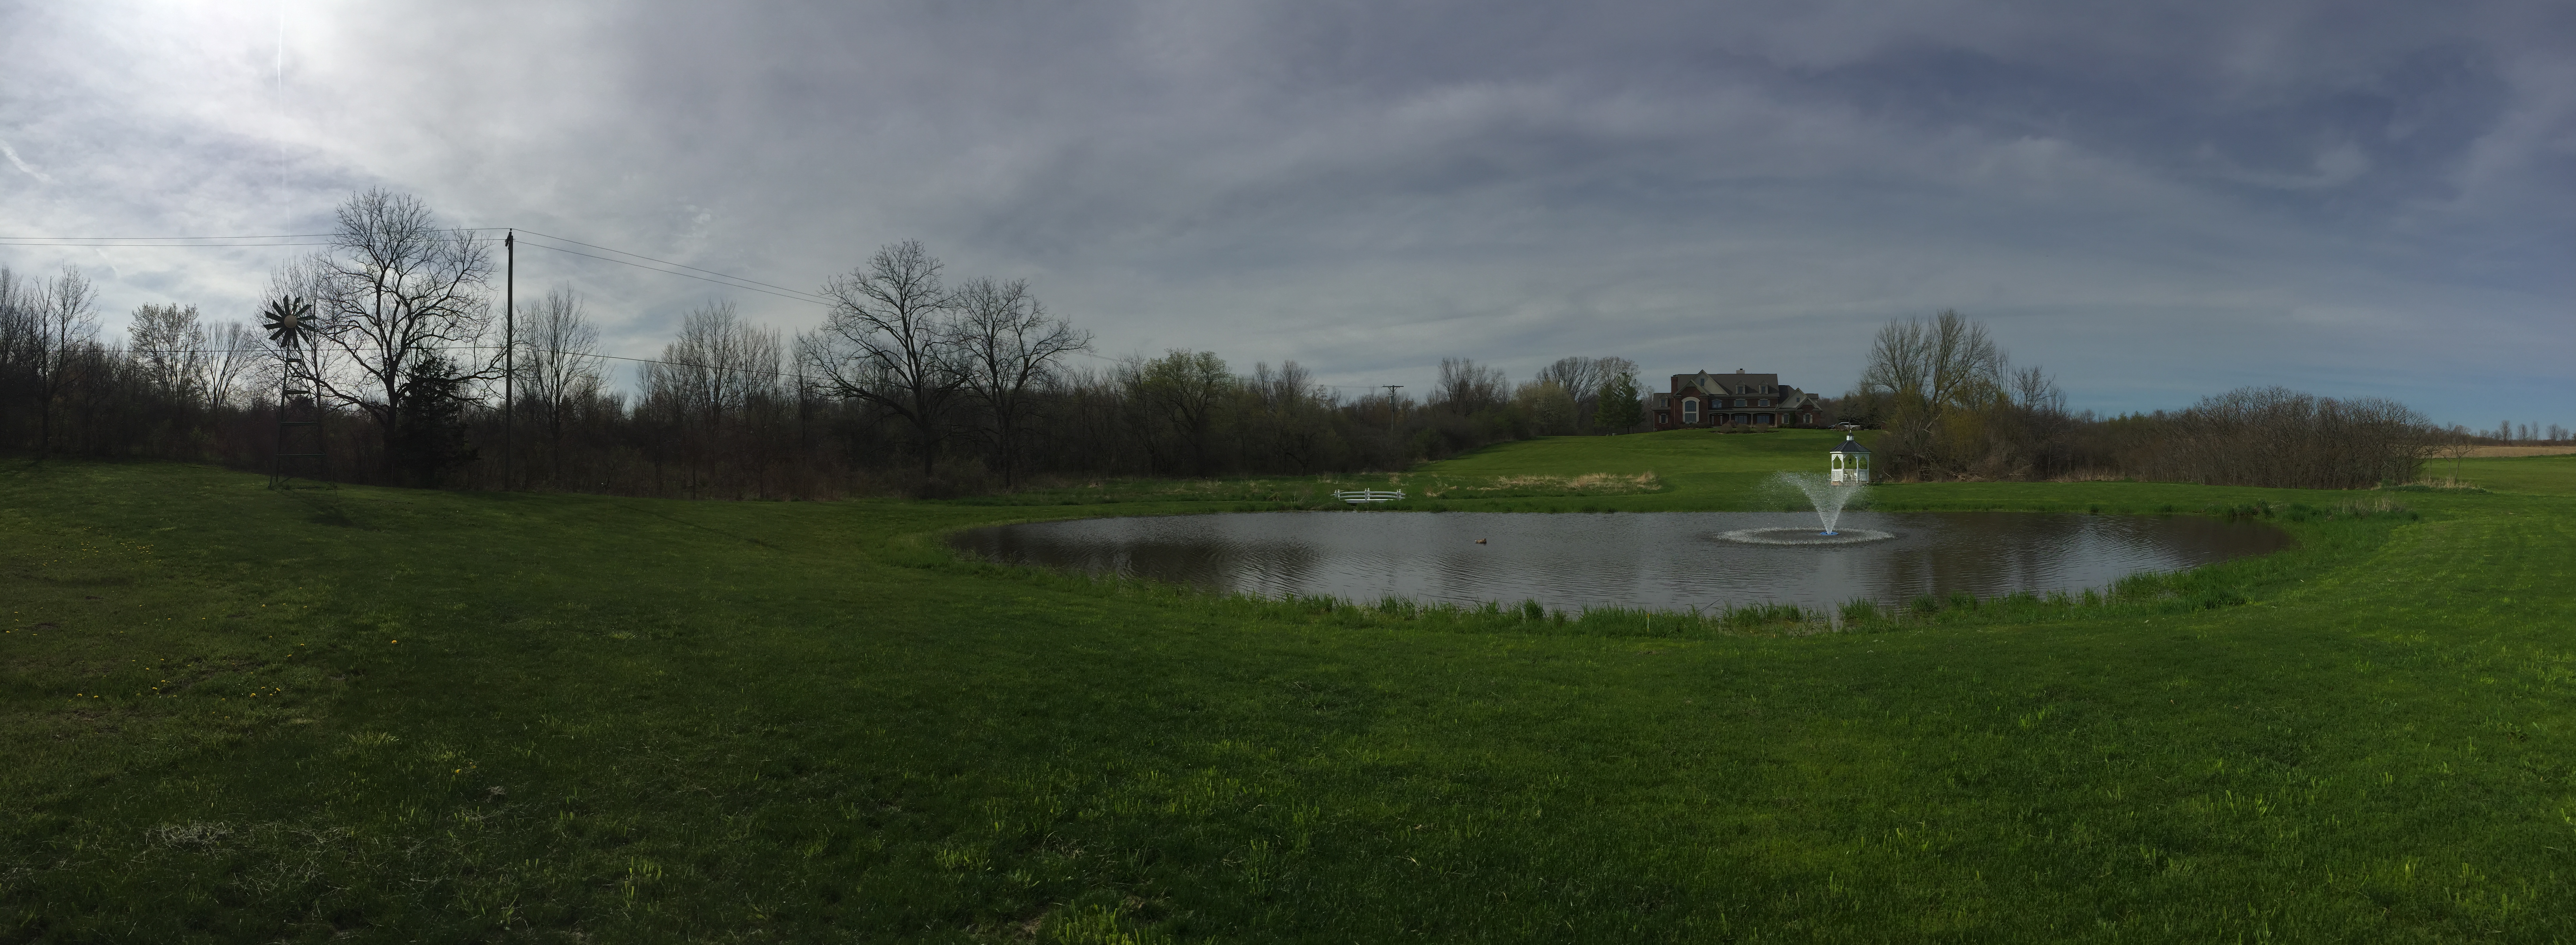 Abandoned_pond_renovation_Michigan_Salem_Twp_62-1.jpg